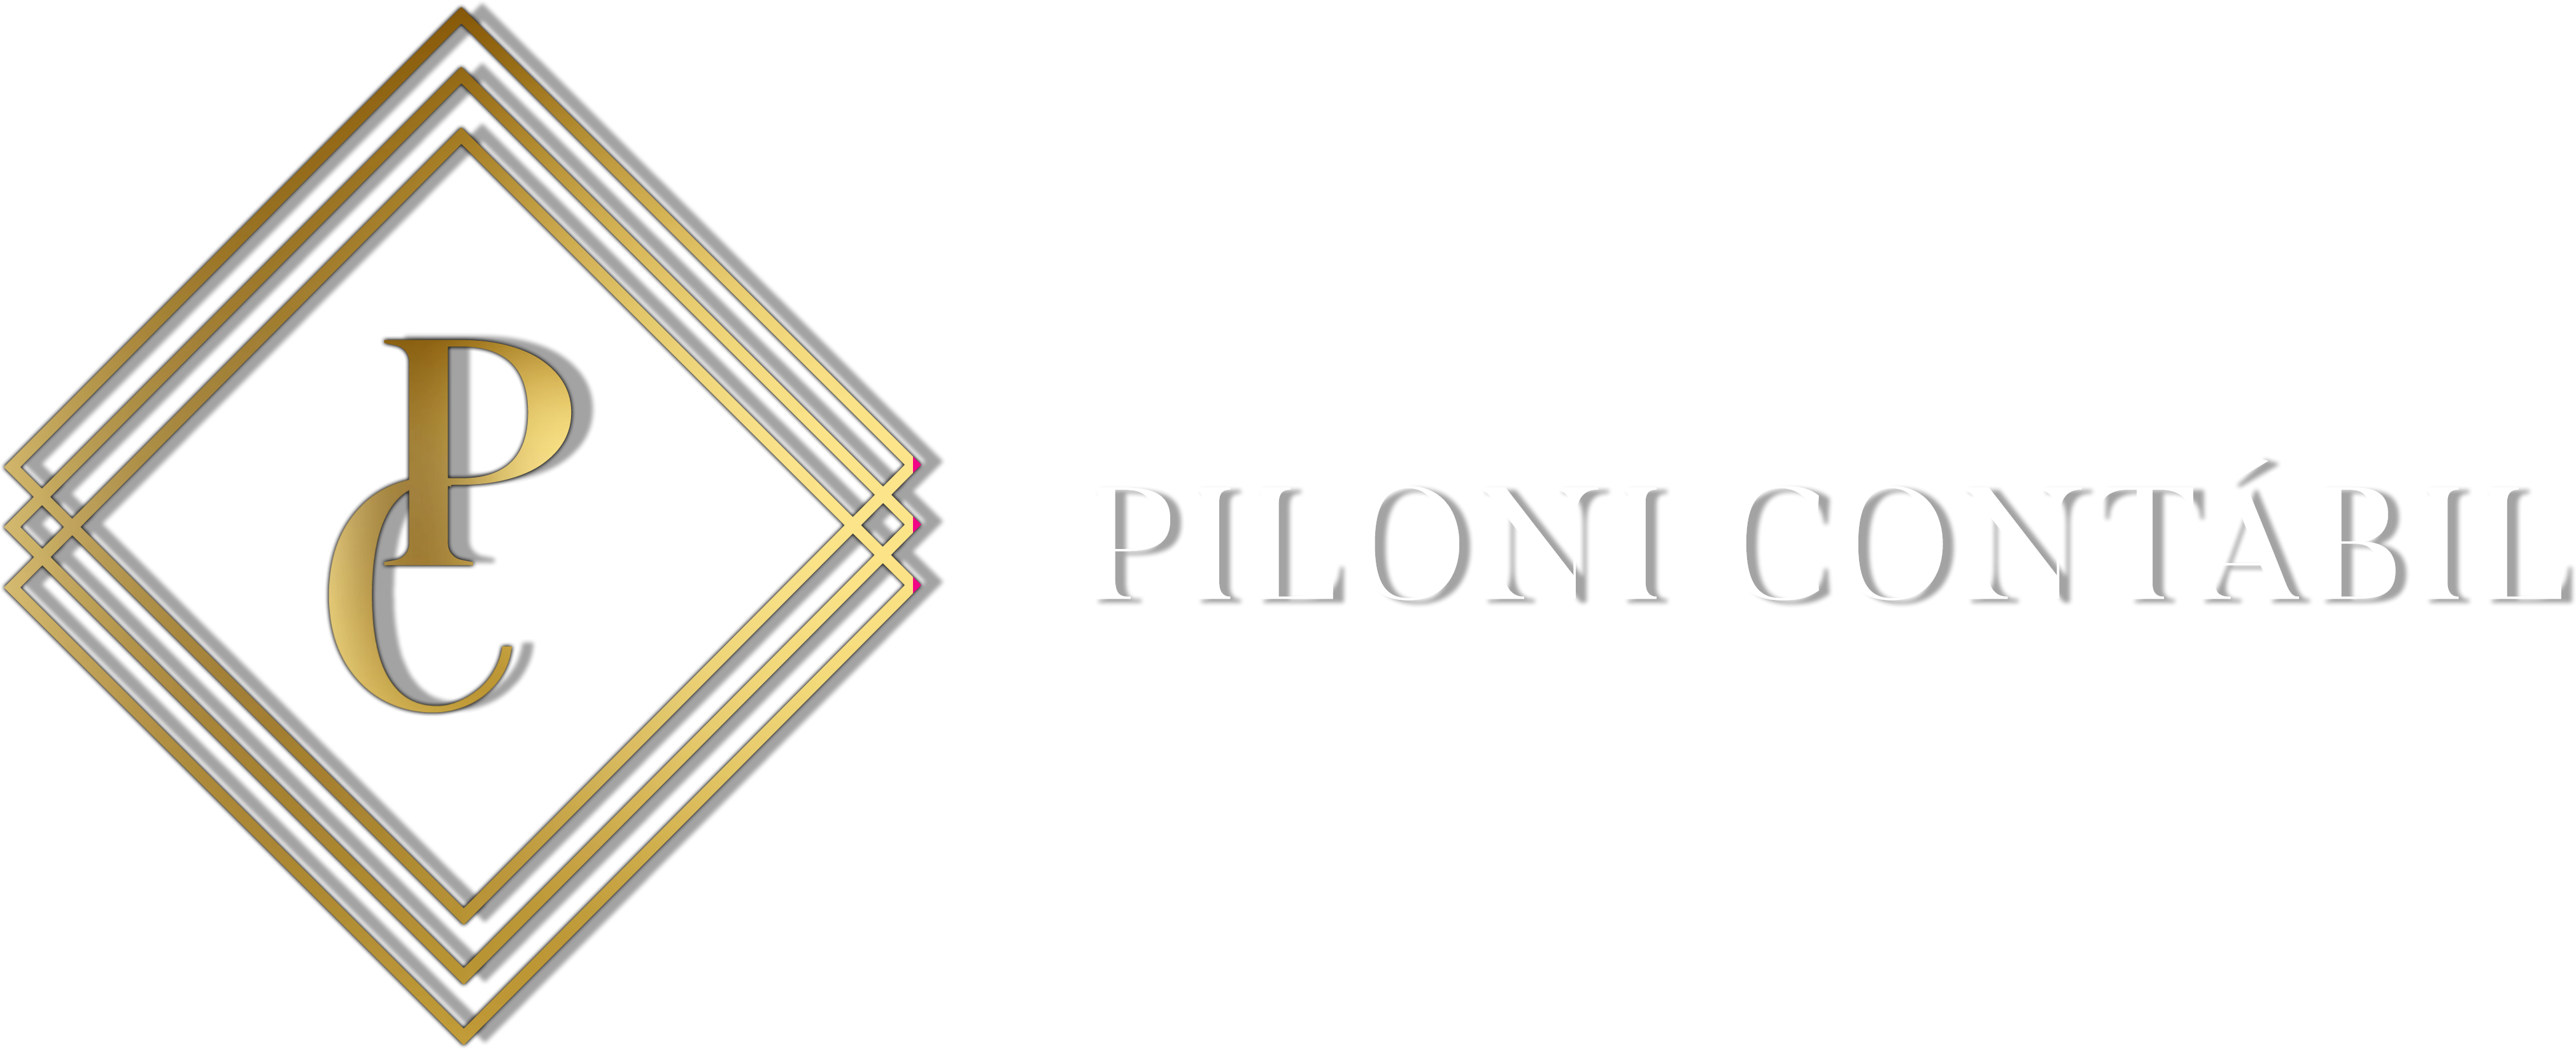 Piloni